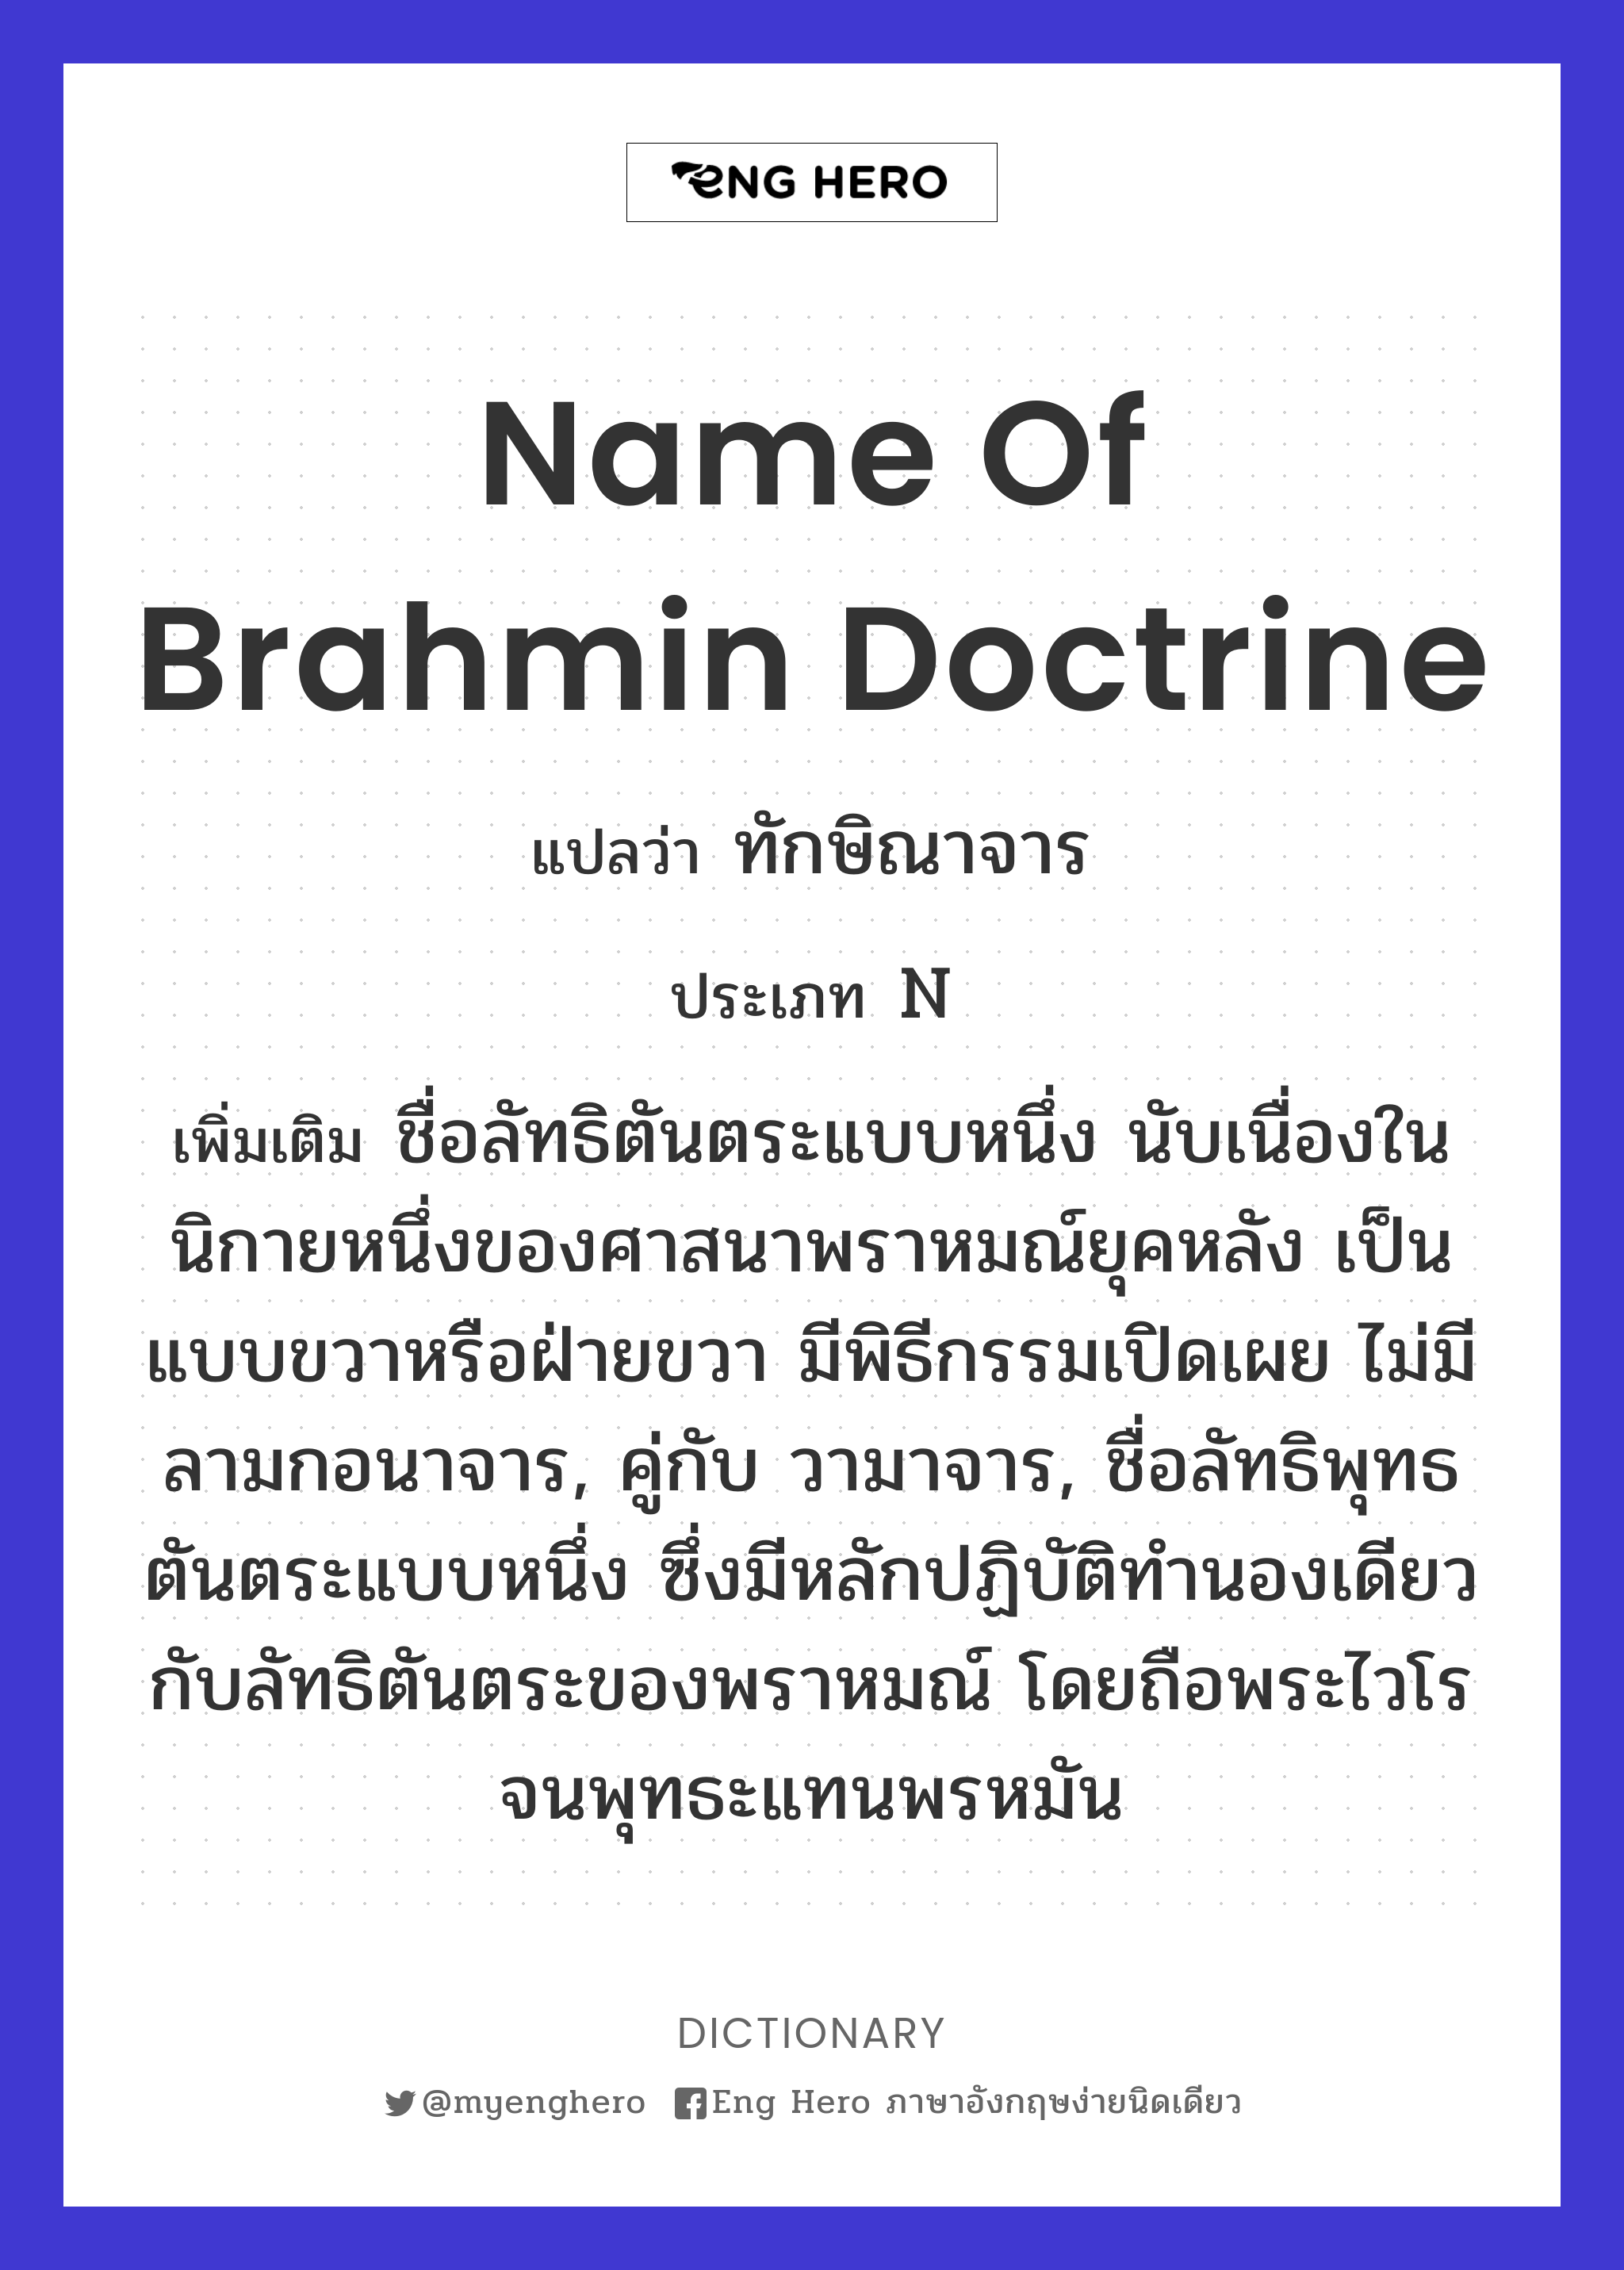 name of Brahmin doctrine